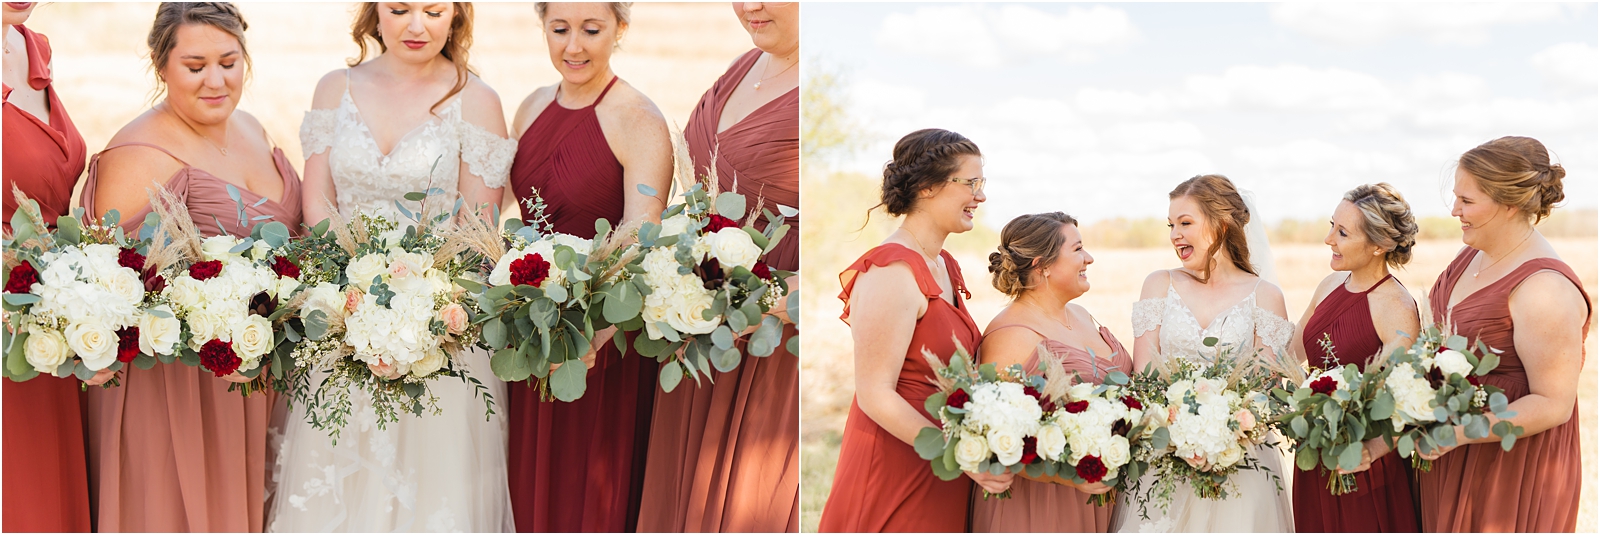 bride and bridesmaids in Boise Idaho destination wedding photo by Miranda Renee Photography